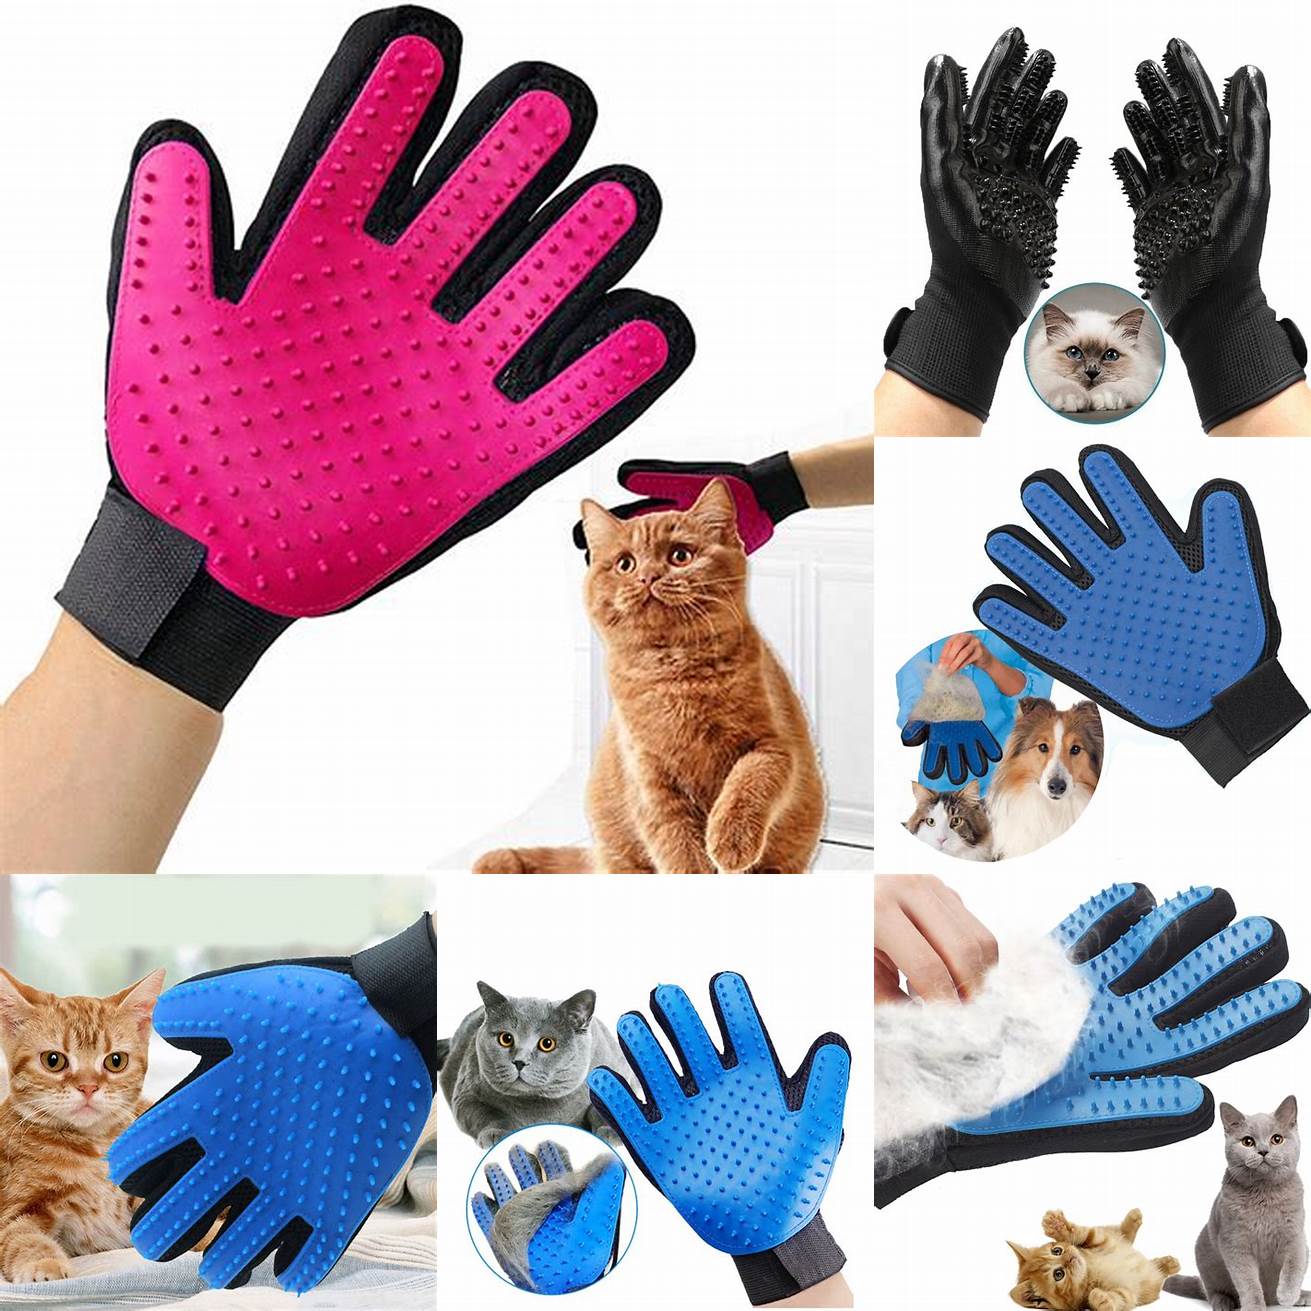 Grooming gloves or brush